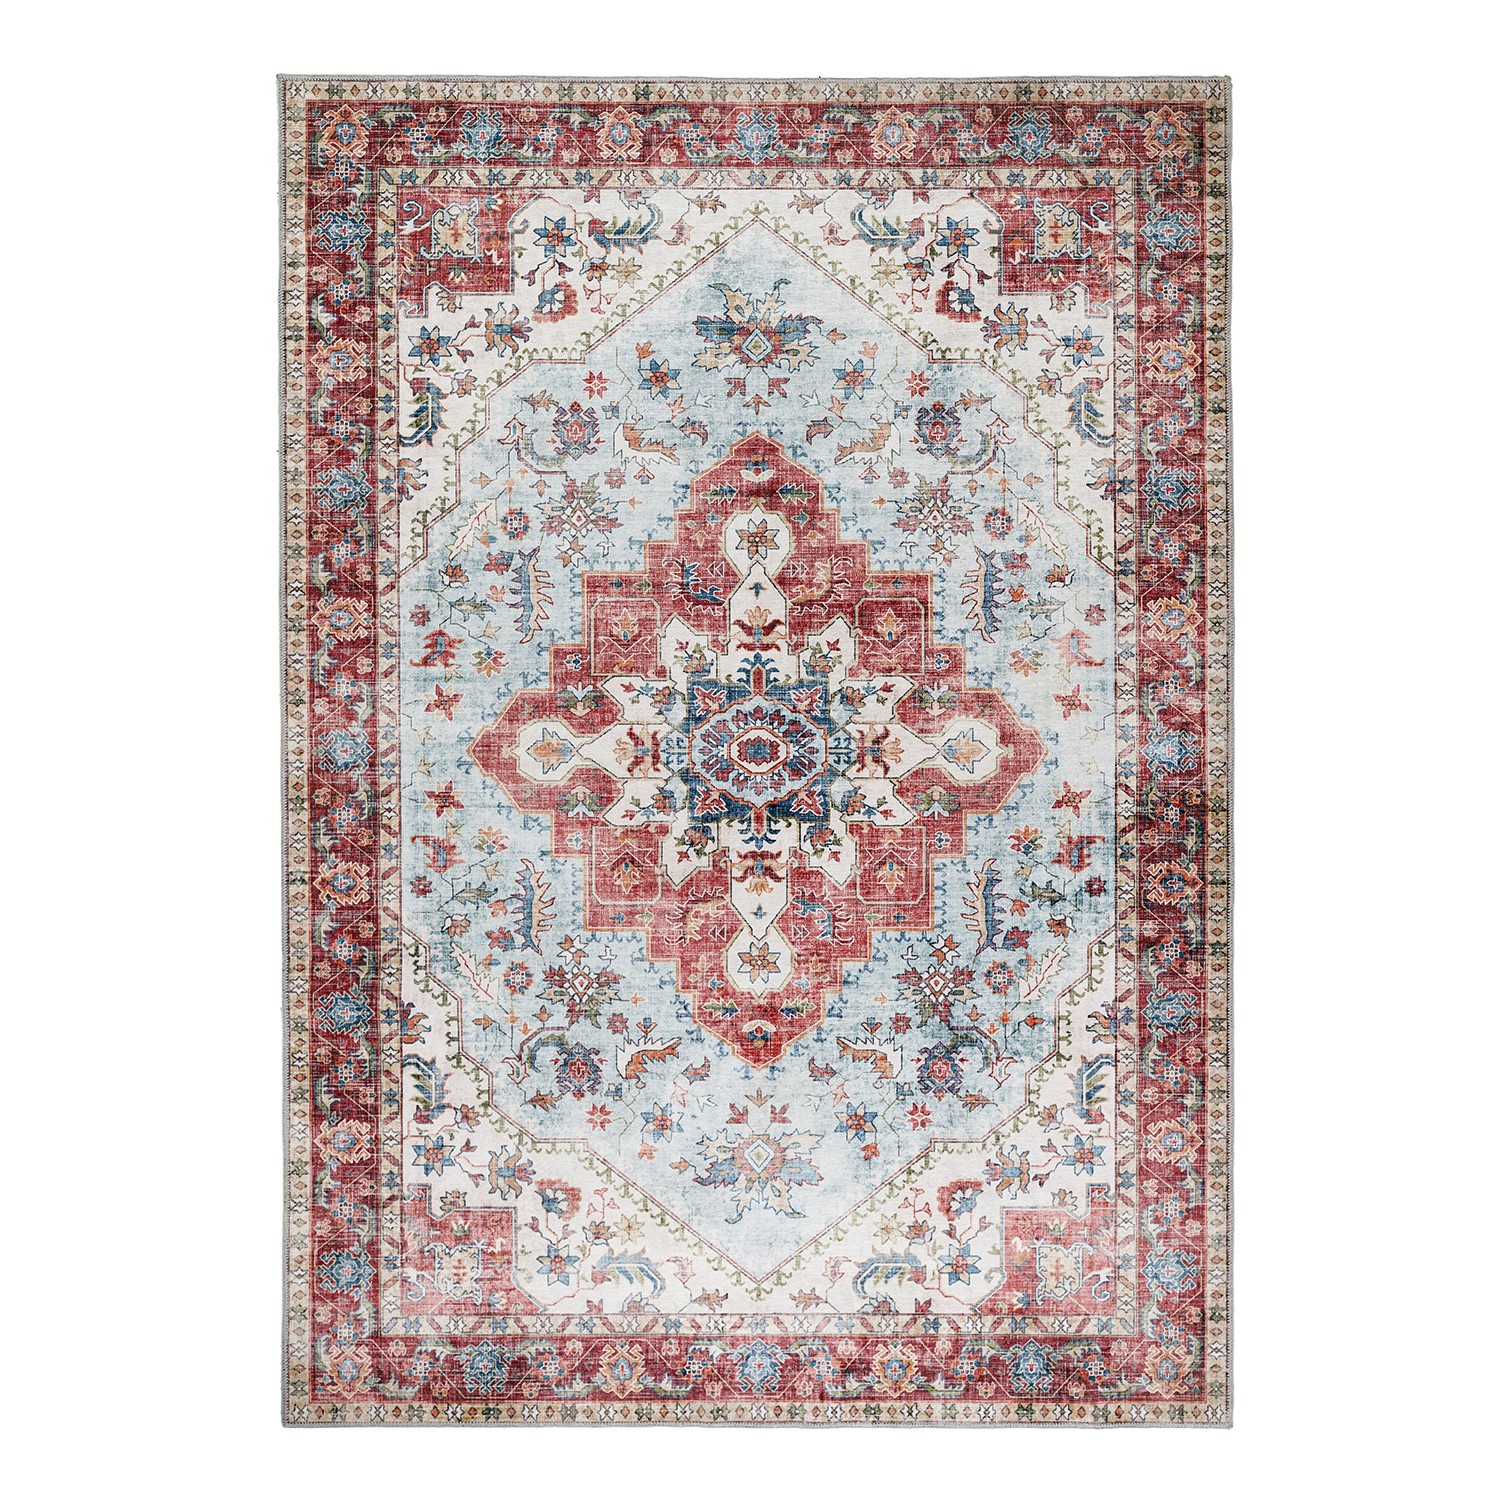 Photo of Ripley washable marrakesh rug 120x170